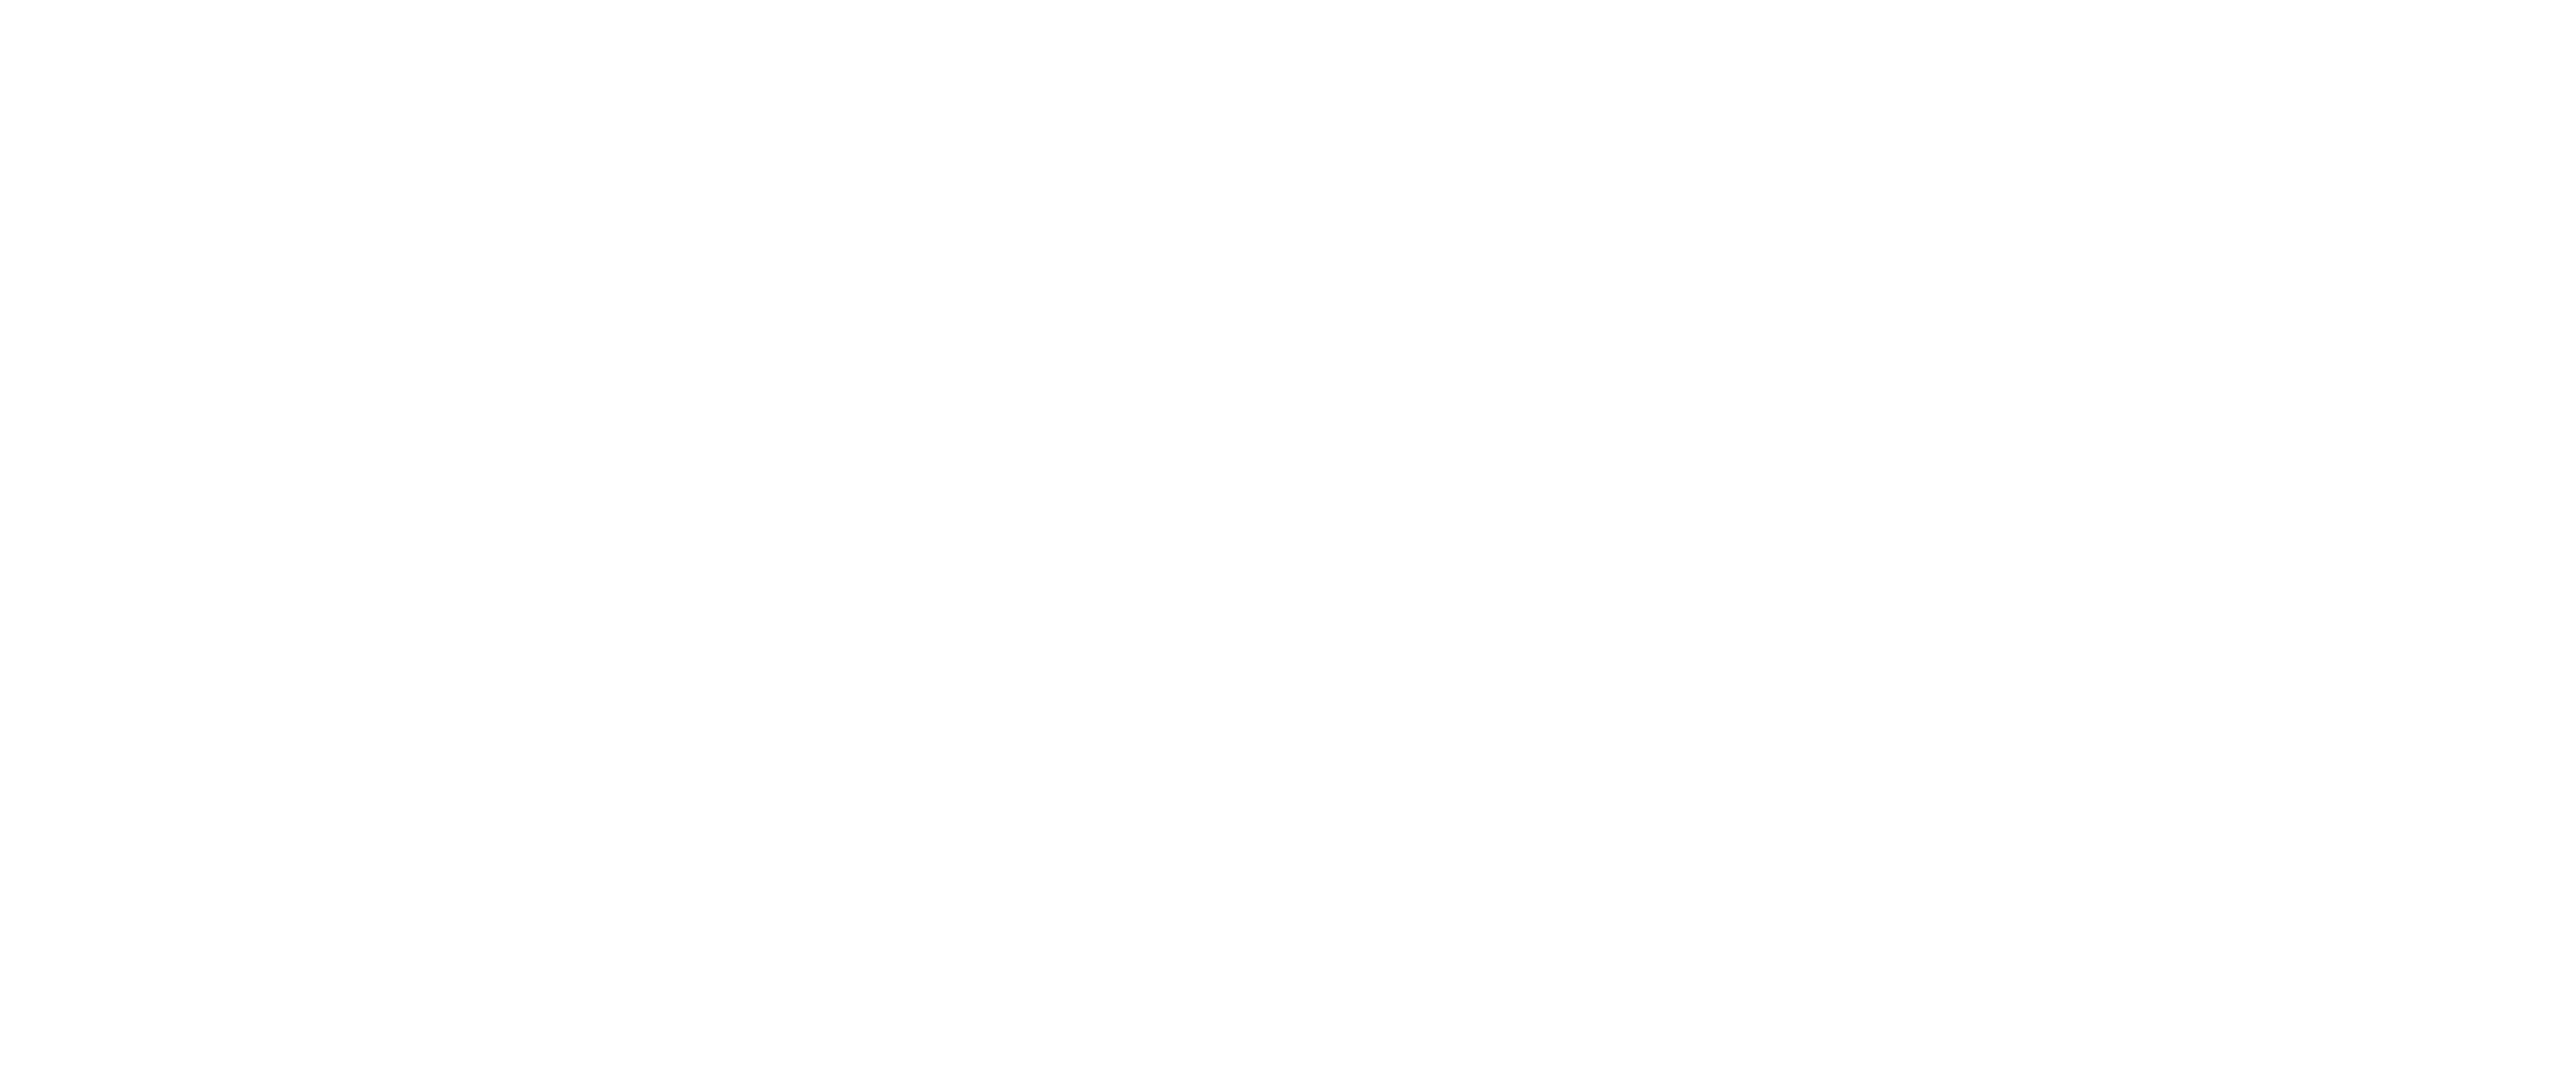 ewaste security compliant data destruction